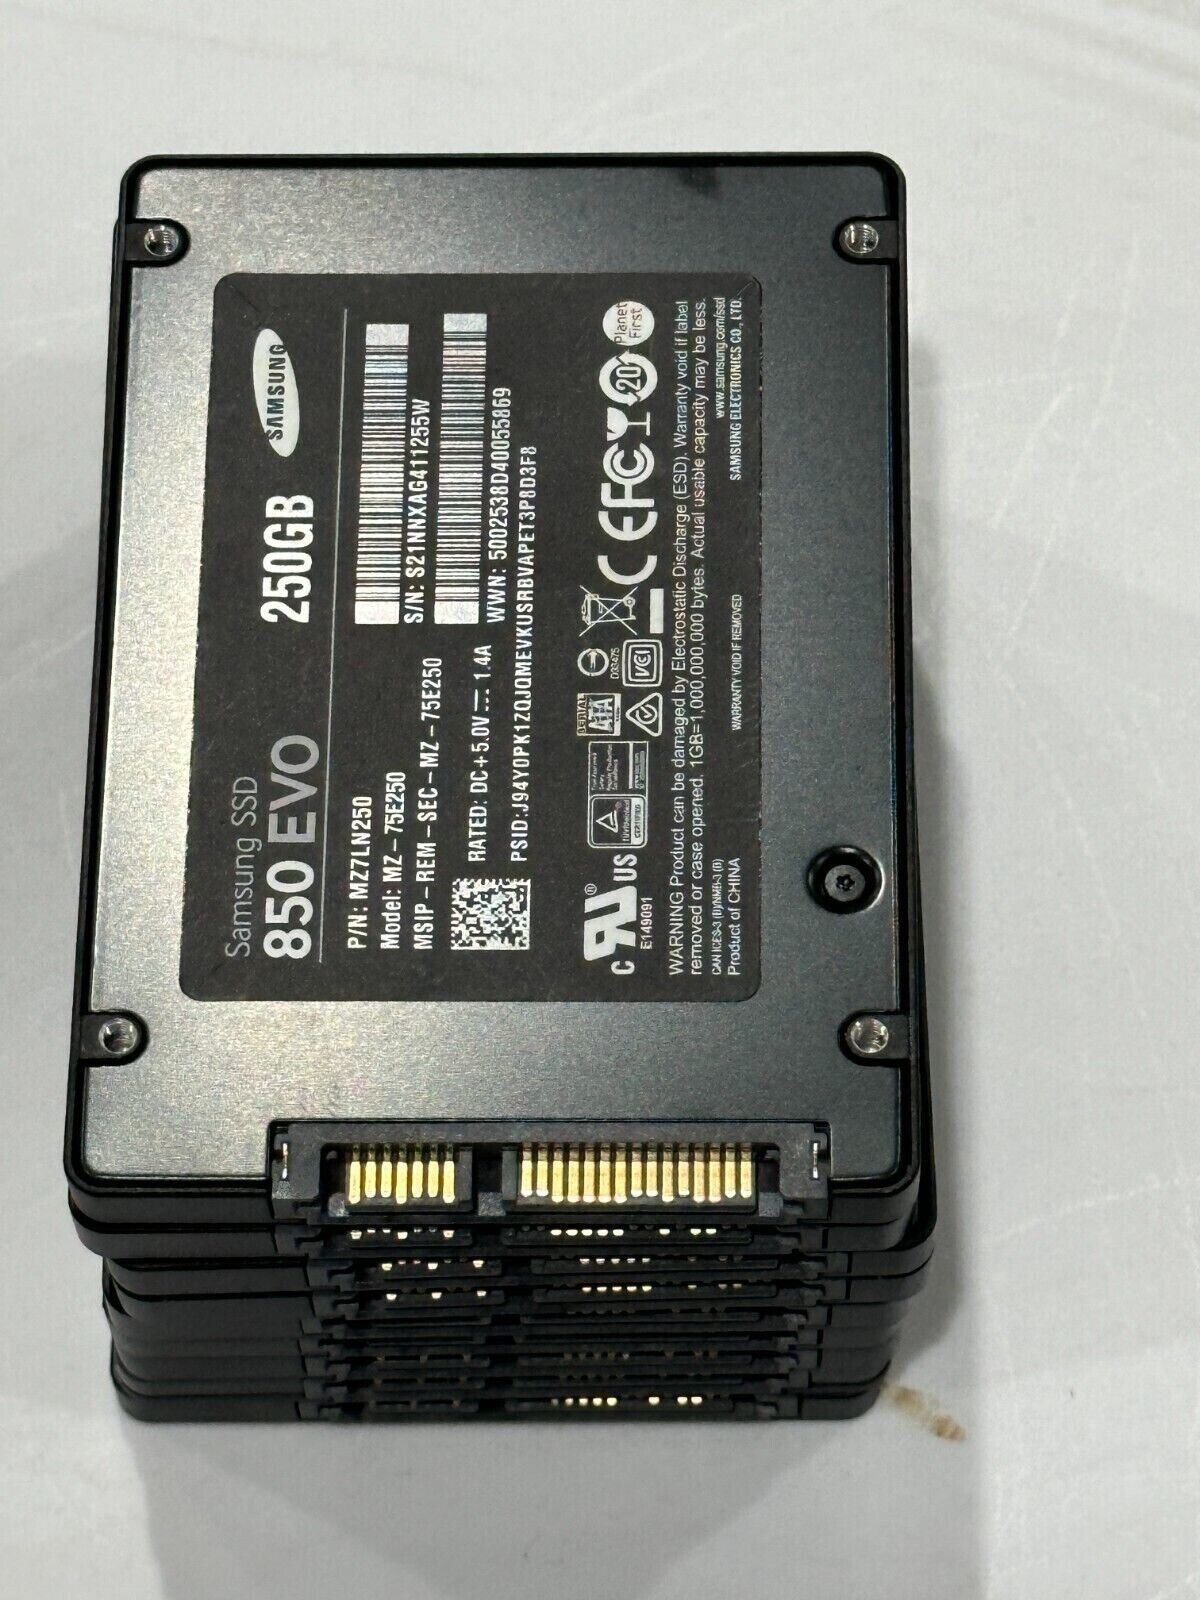 (Set of 10) Samsung 850 EVO 250GB,Internal,2.5 inch (MZ75E250) Solid State Drive